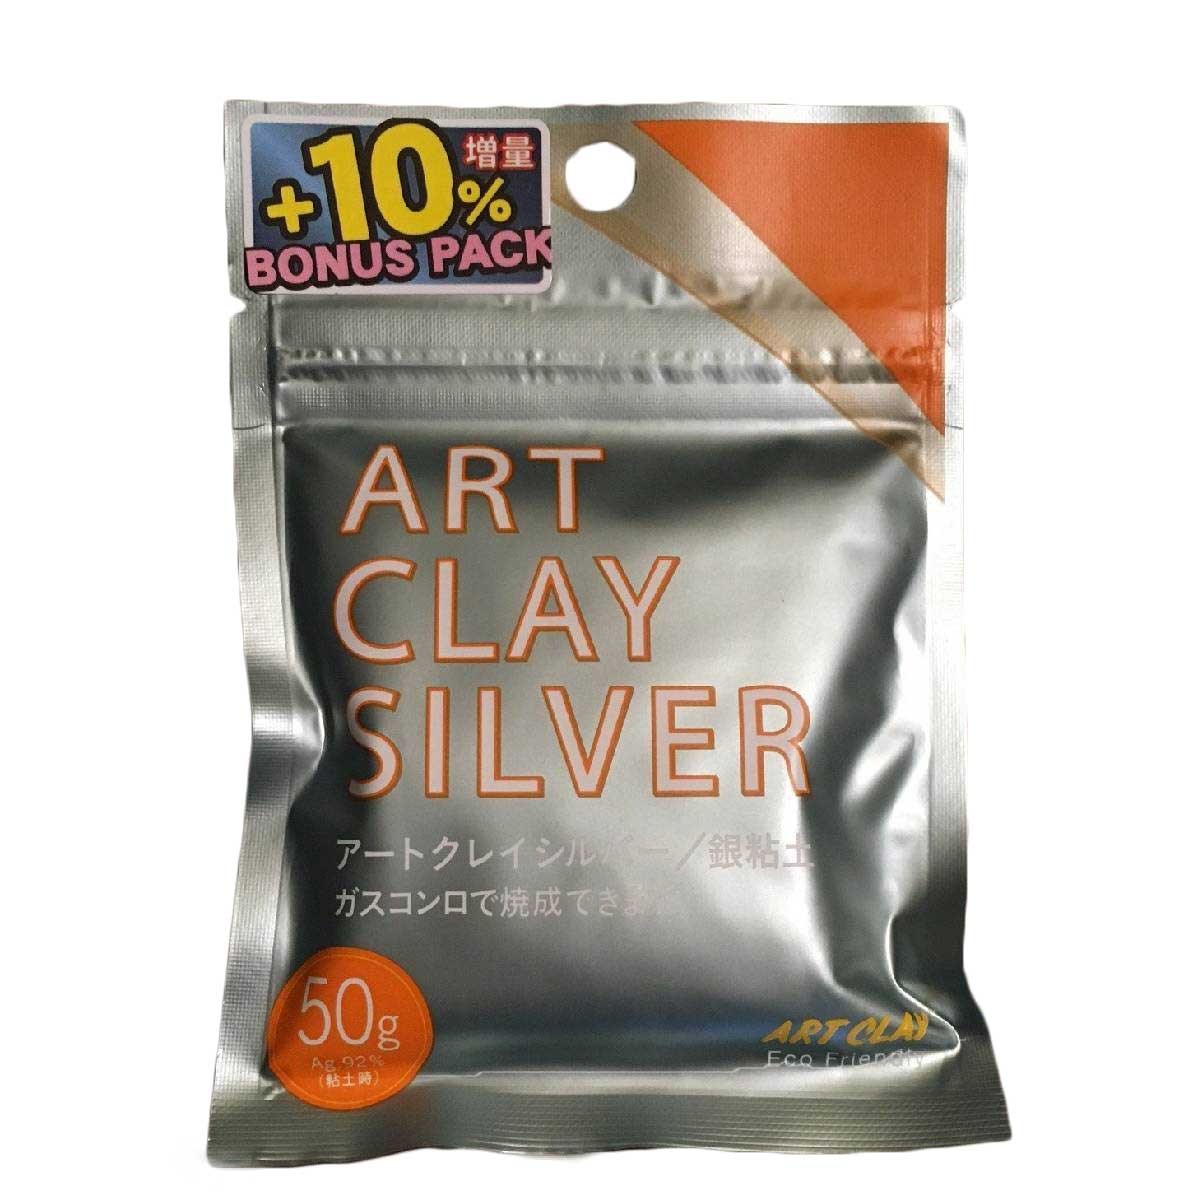 Metal Clays